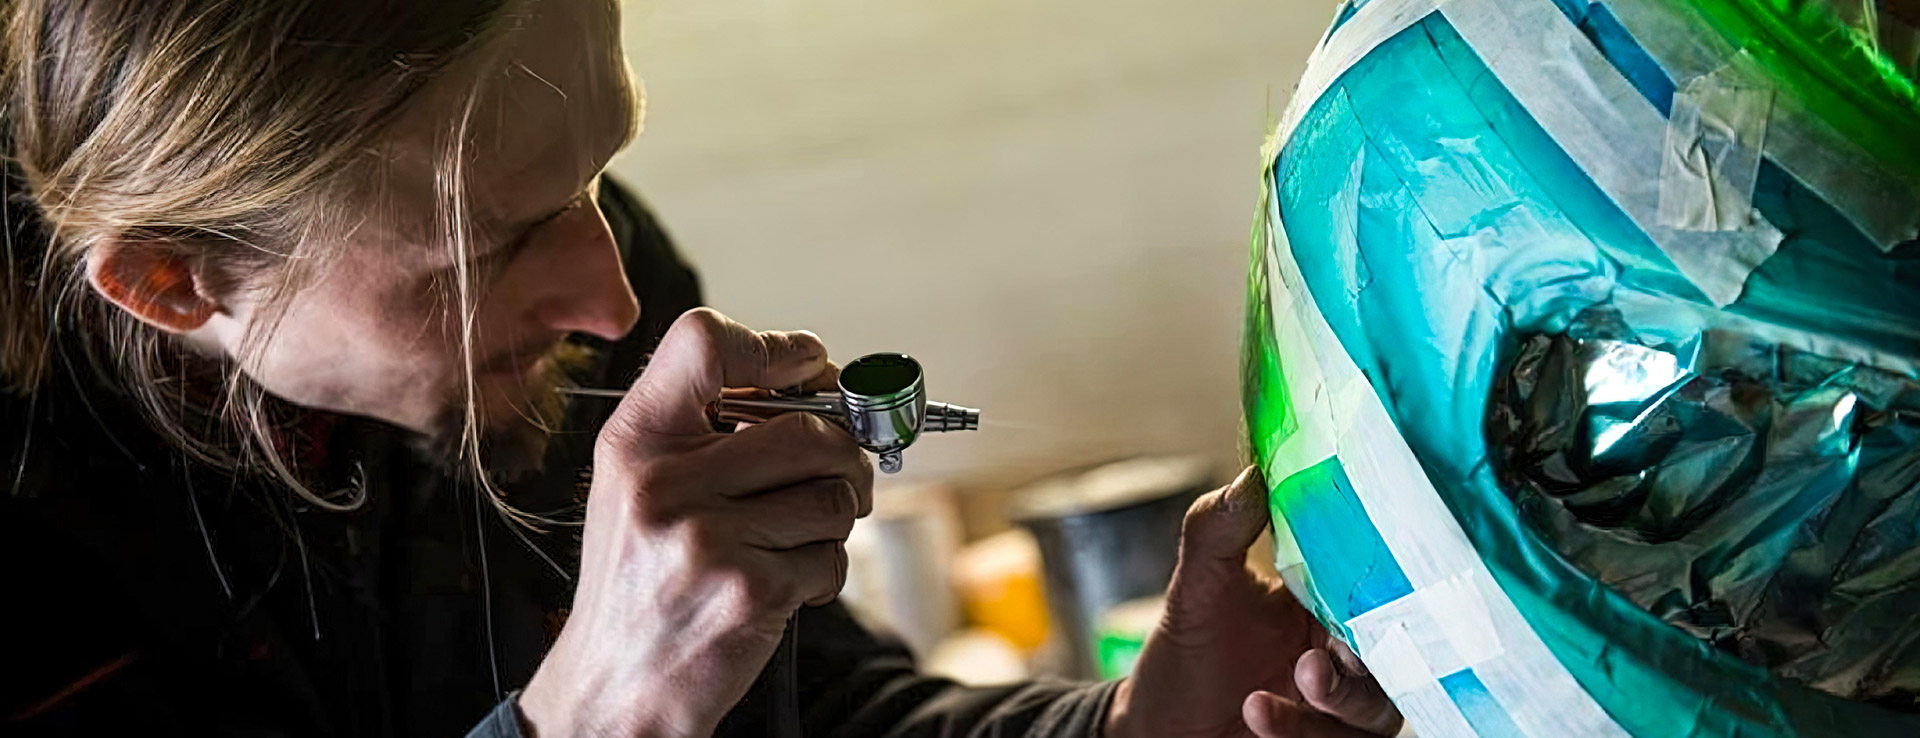 Designer sprays racing helmet with airbrush paint